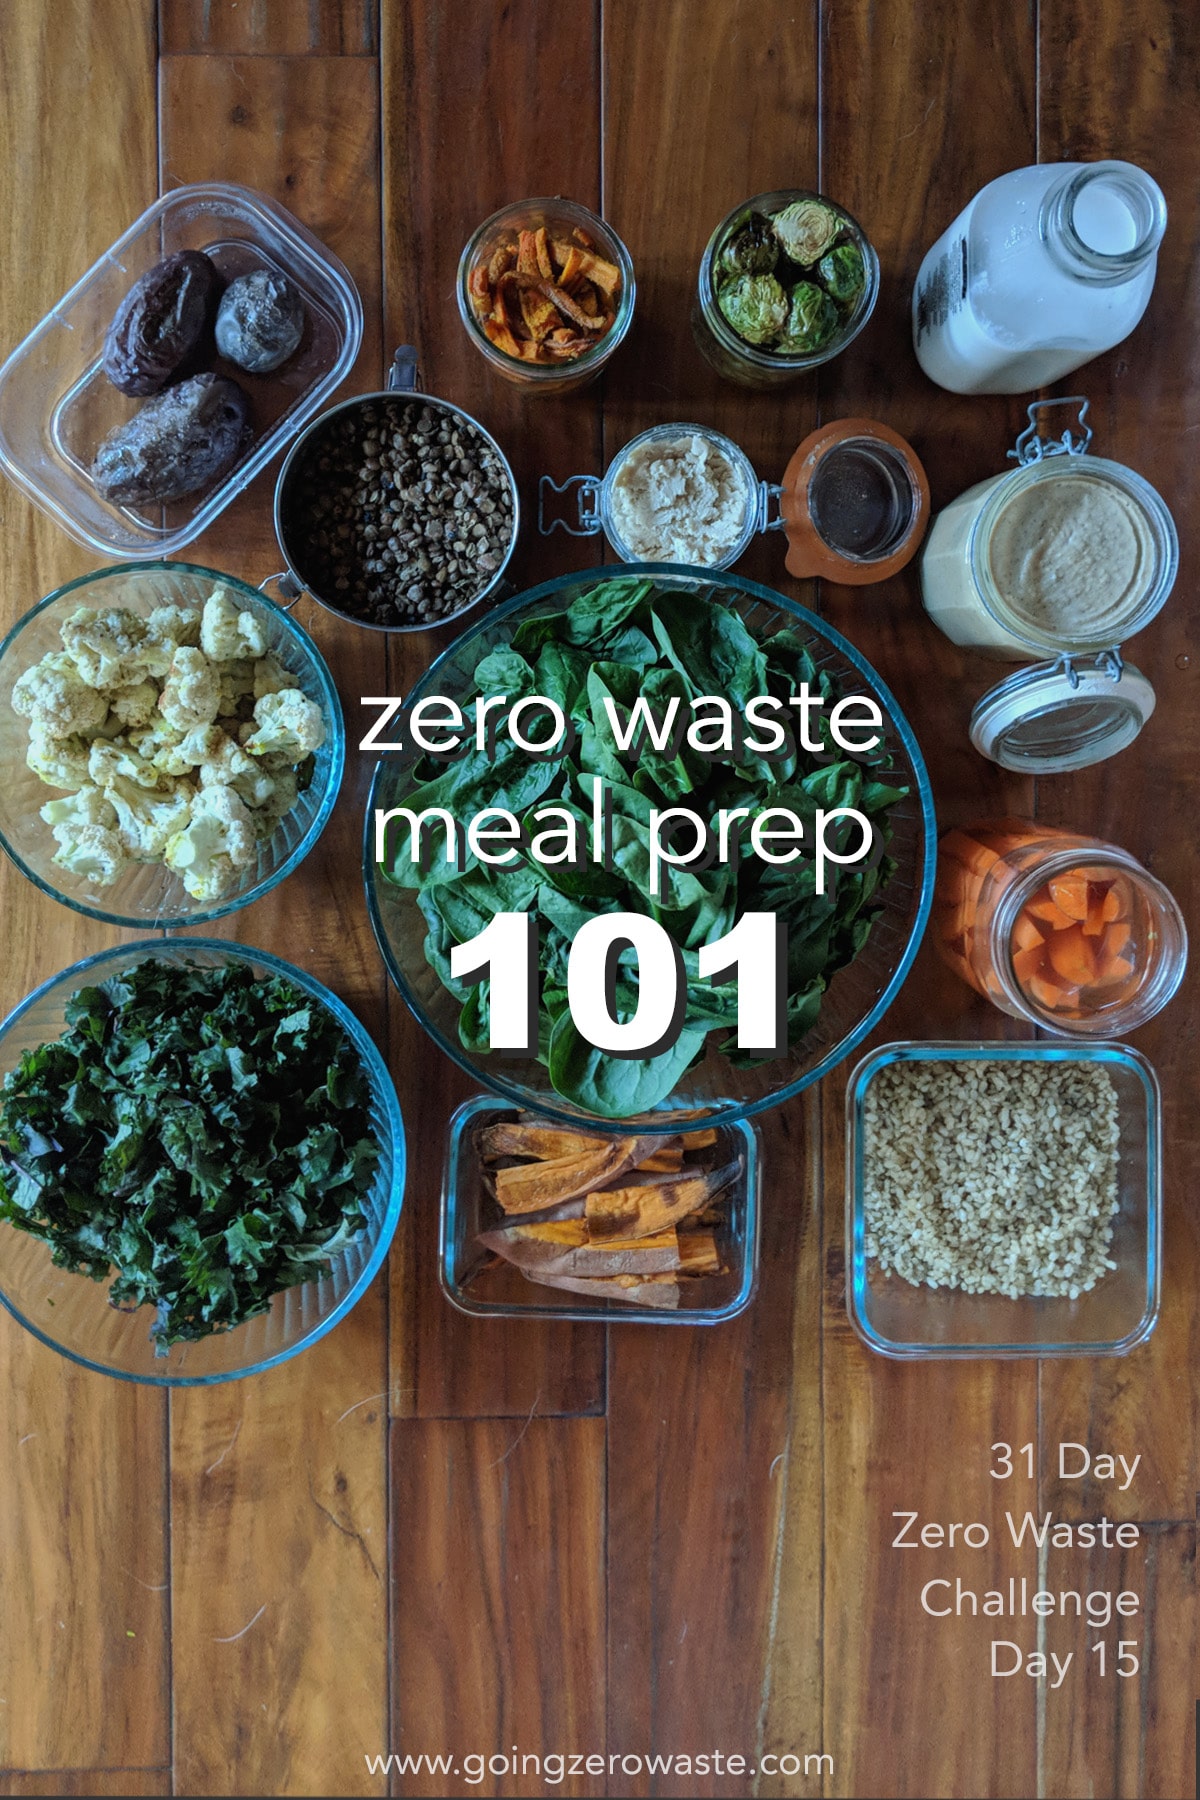 Zero Waste Meal Prep 101 - Day 15 of the Zero Waste Challenge